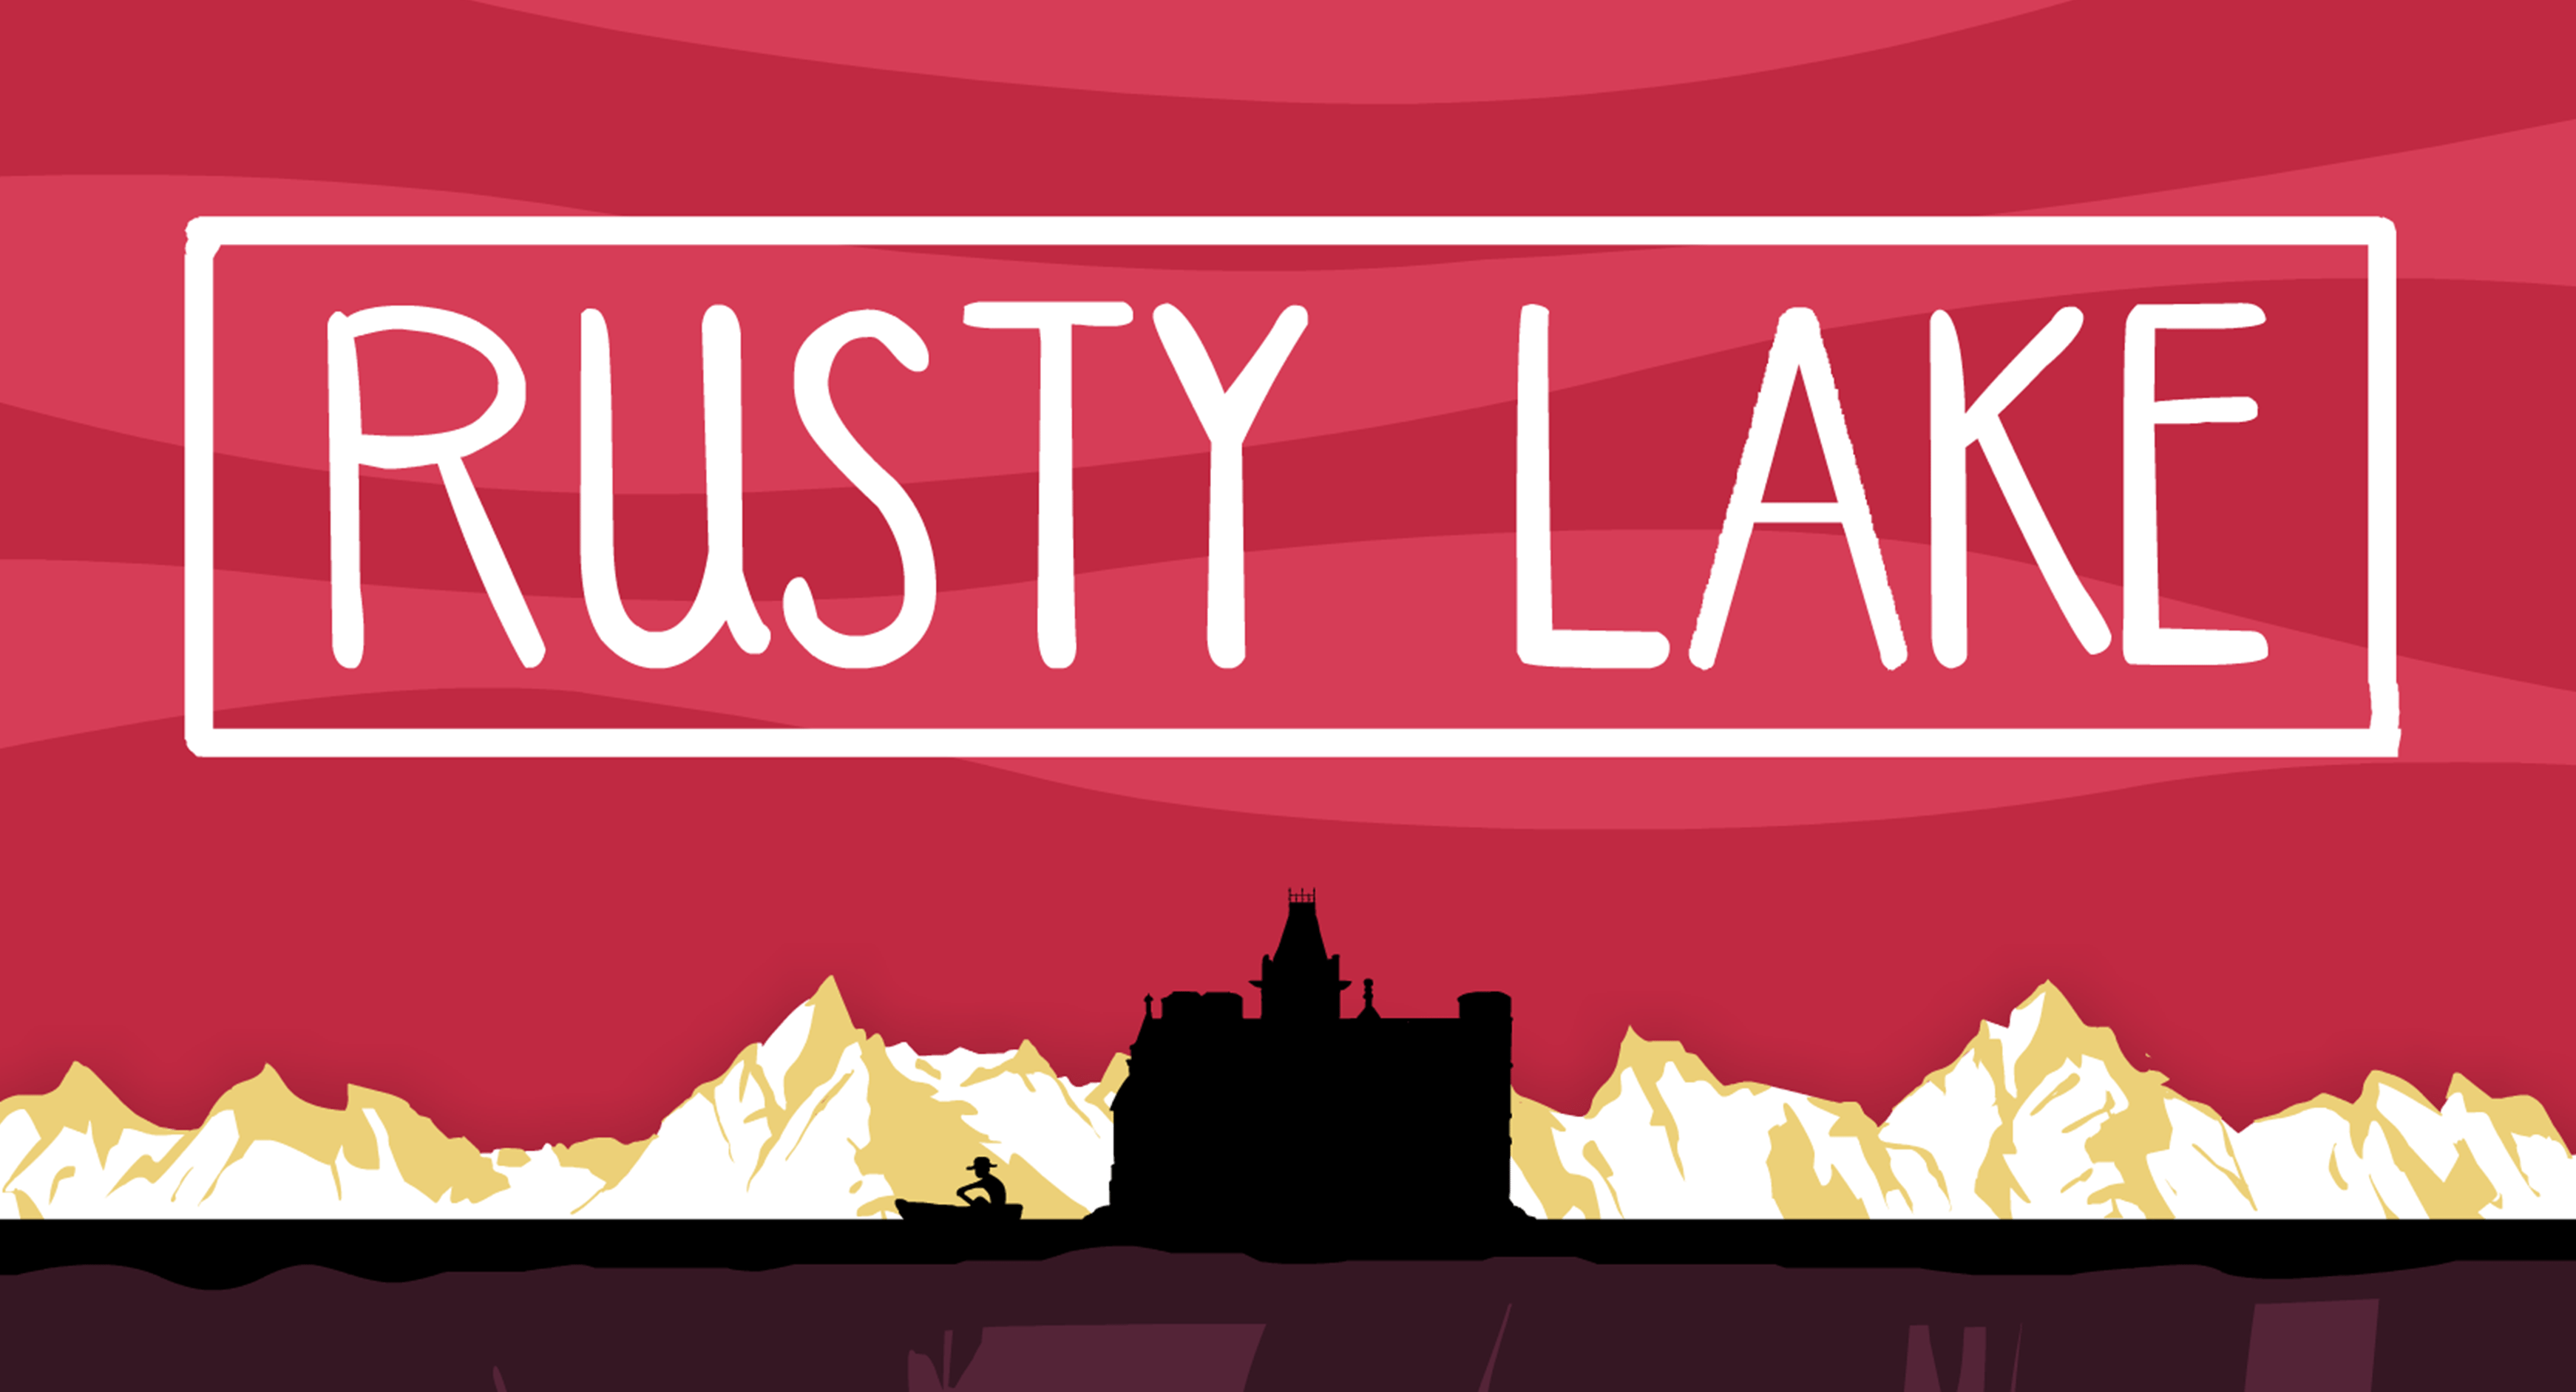 Rusty Lake logo